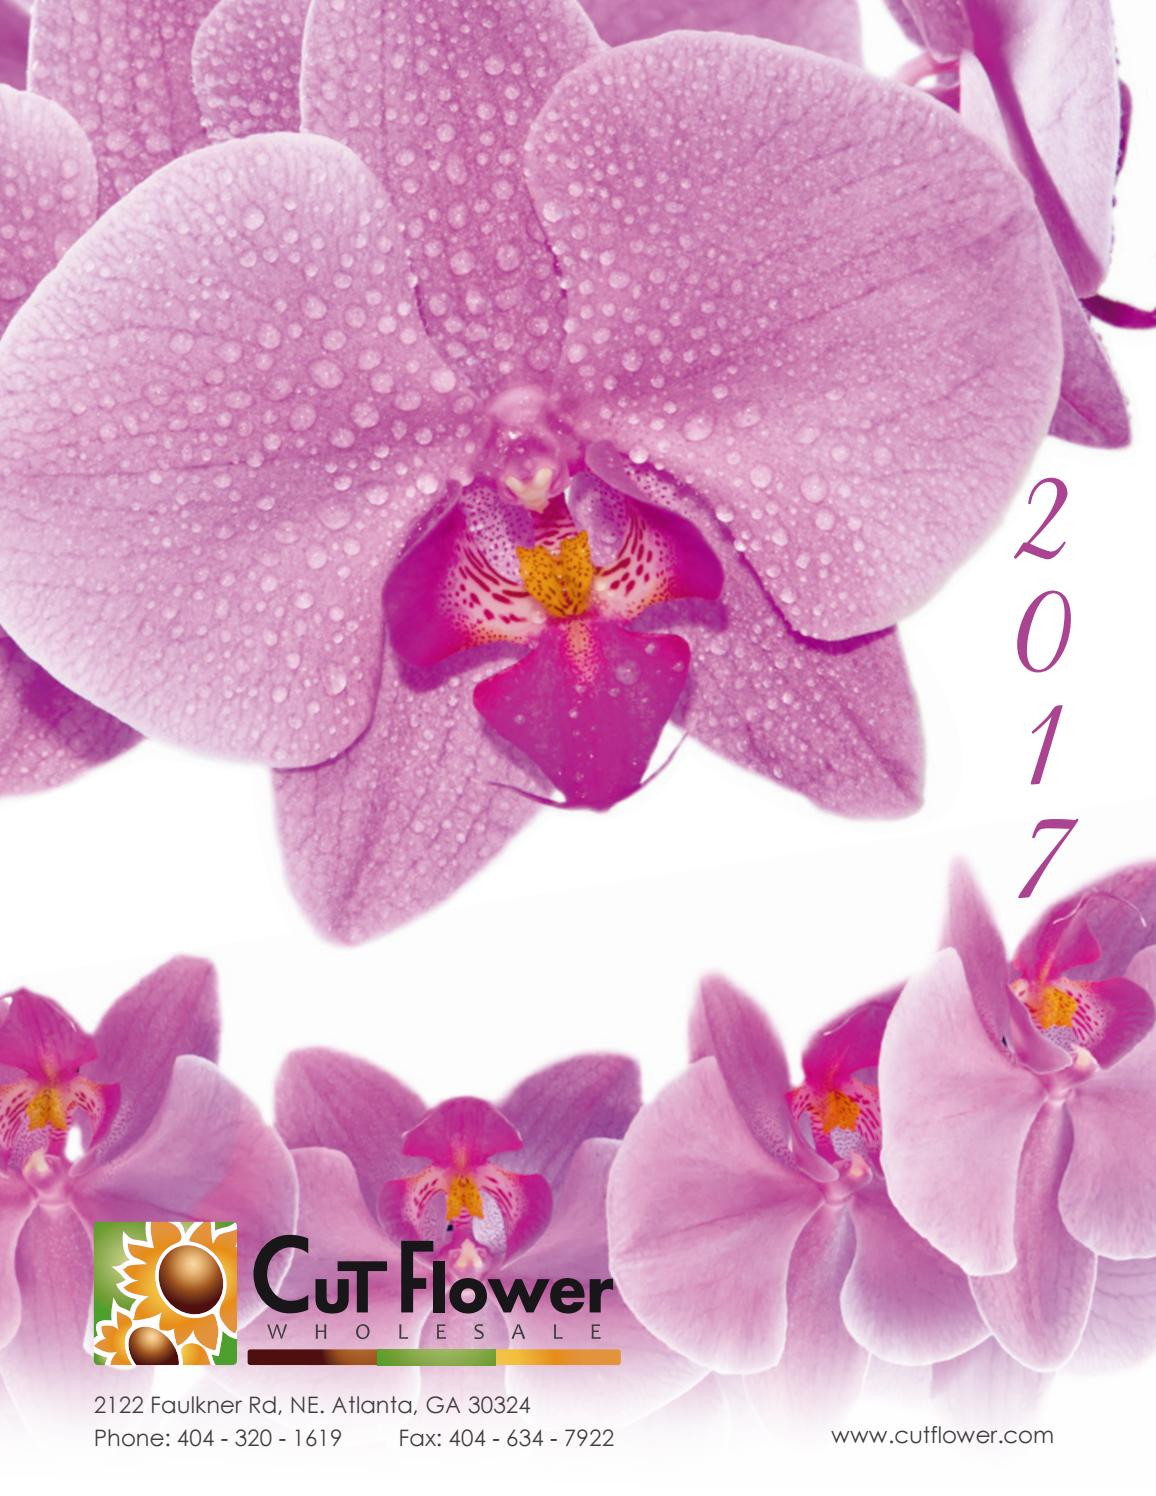 Mint Julep Vases wholesale Of 2017 Cut Flower wholesale Catalog by Cut Flower wholesale Inc issuu Inside Page 1